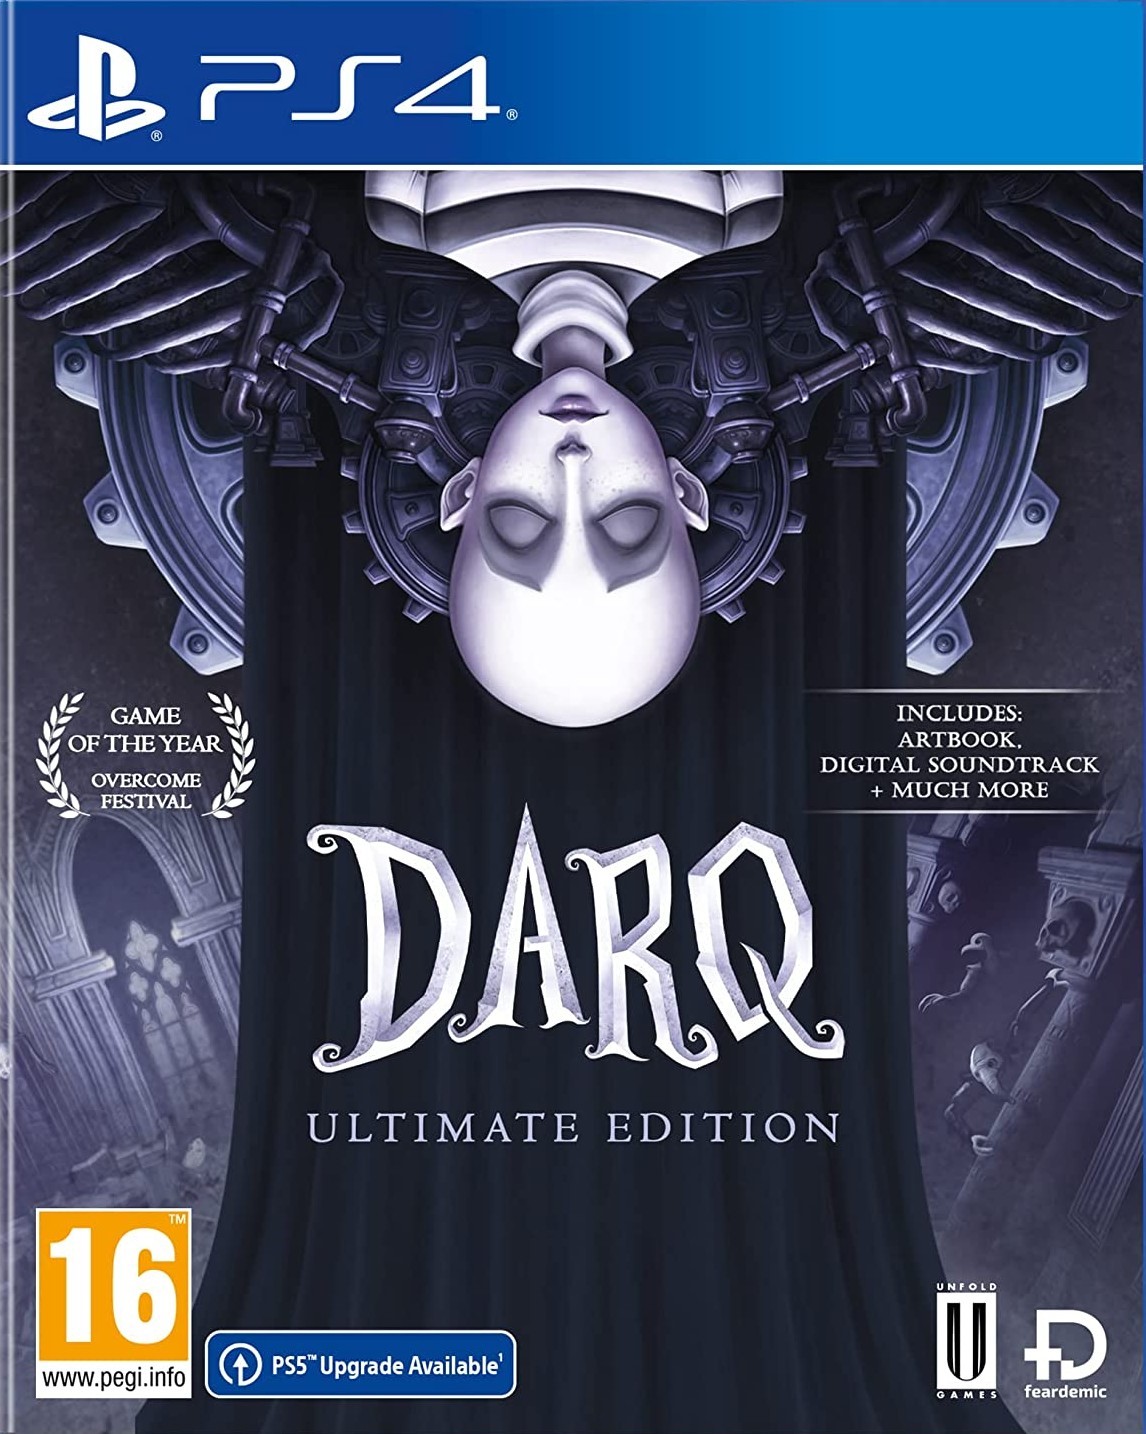 DARQ: Ultimate Edition (русские субтитры) (PS4)